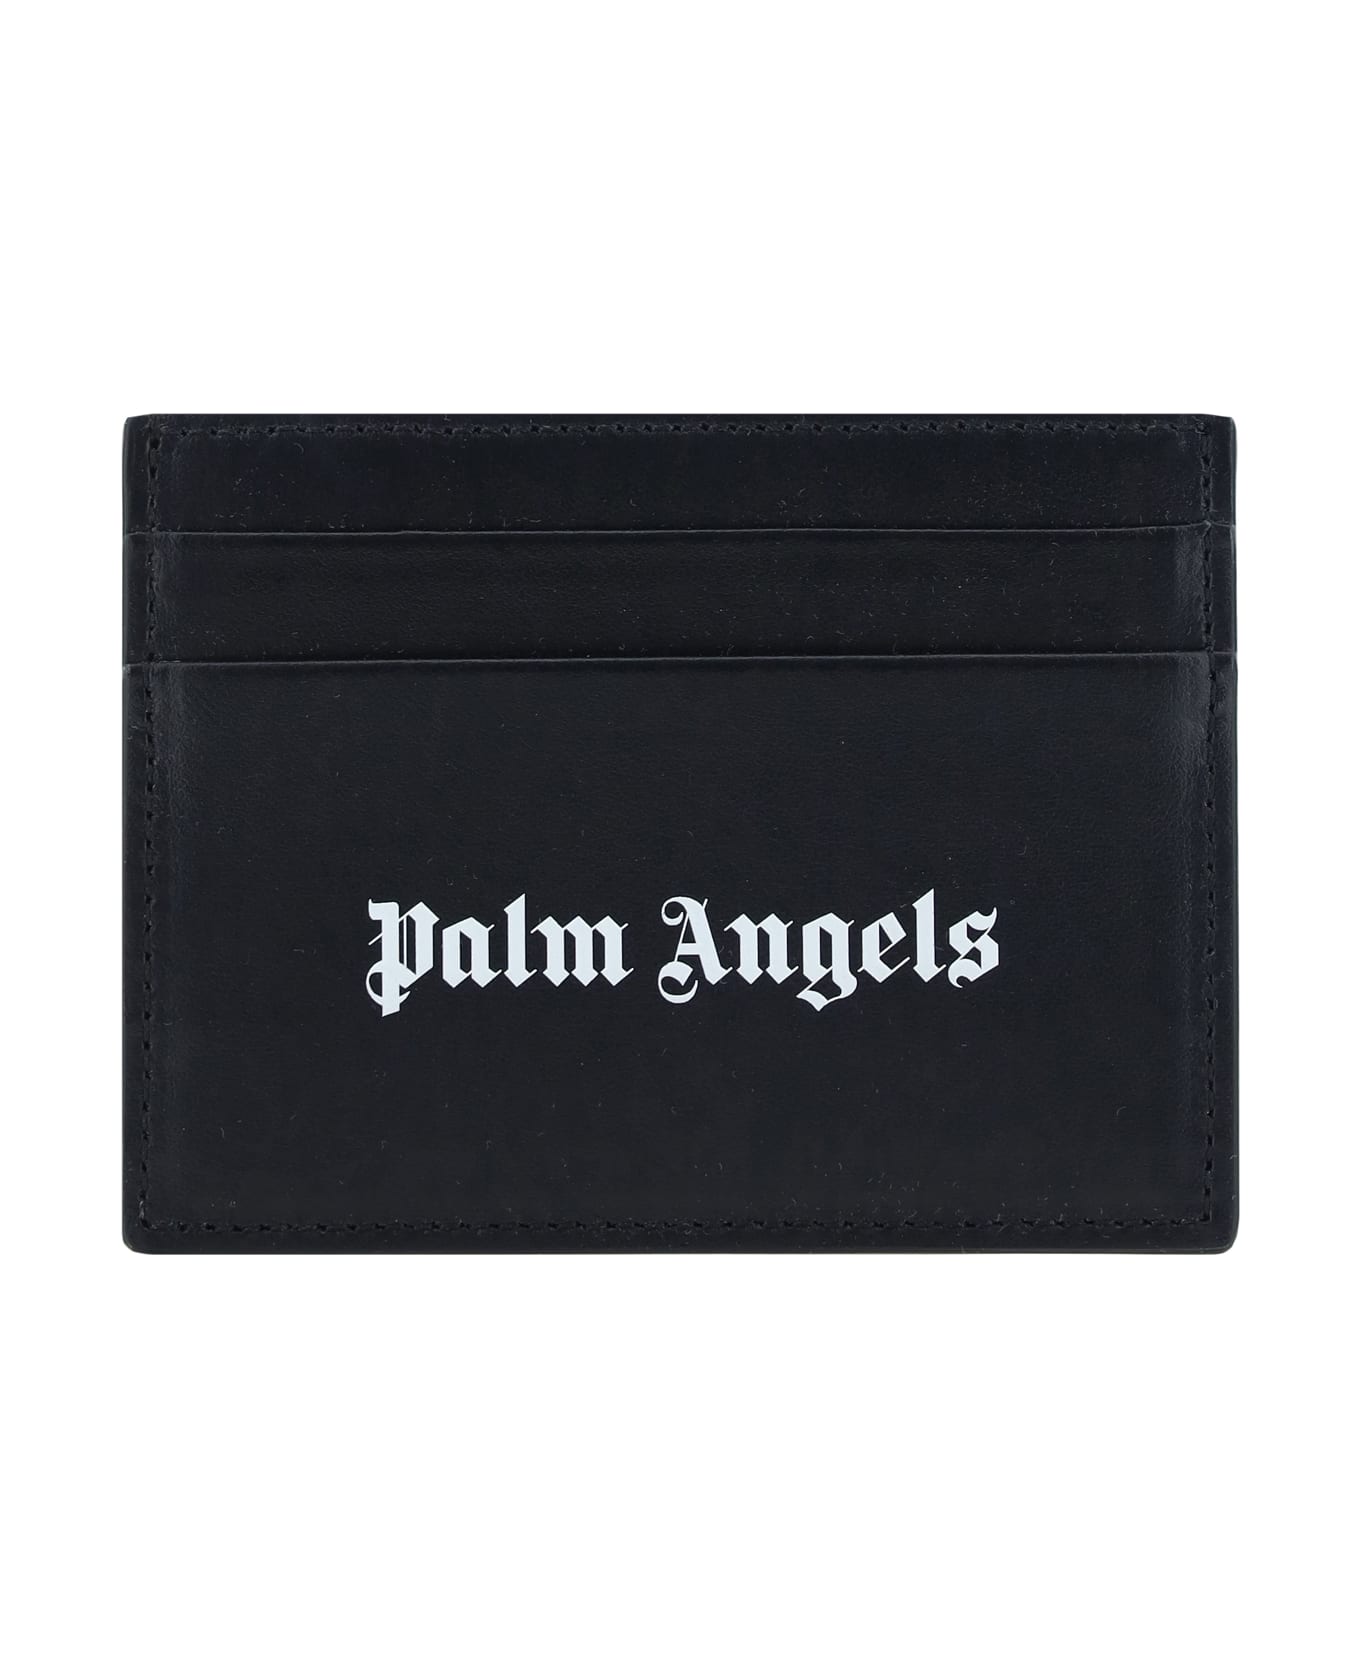 Palm Angels Black Calf Leather Card Holder - Black Opti